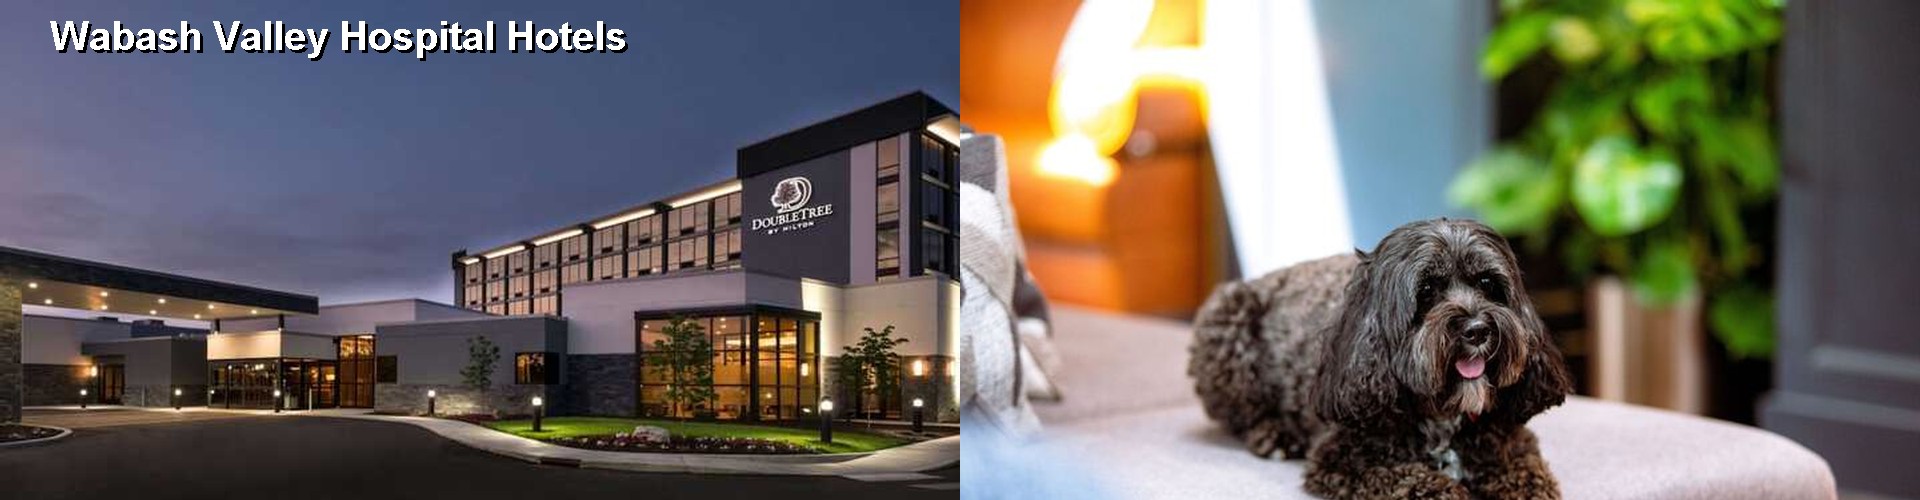 5 Best Hotels near Wabash Valley Hospital